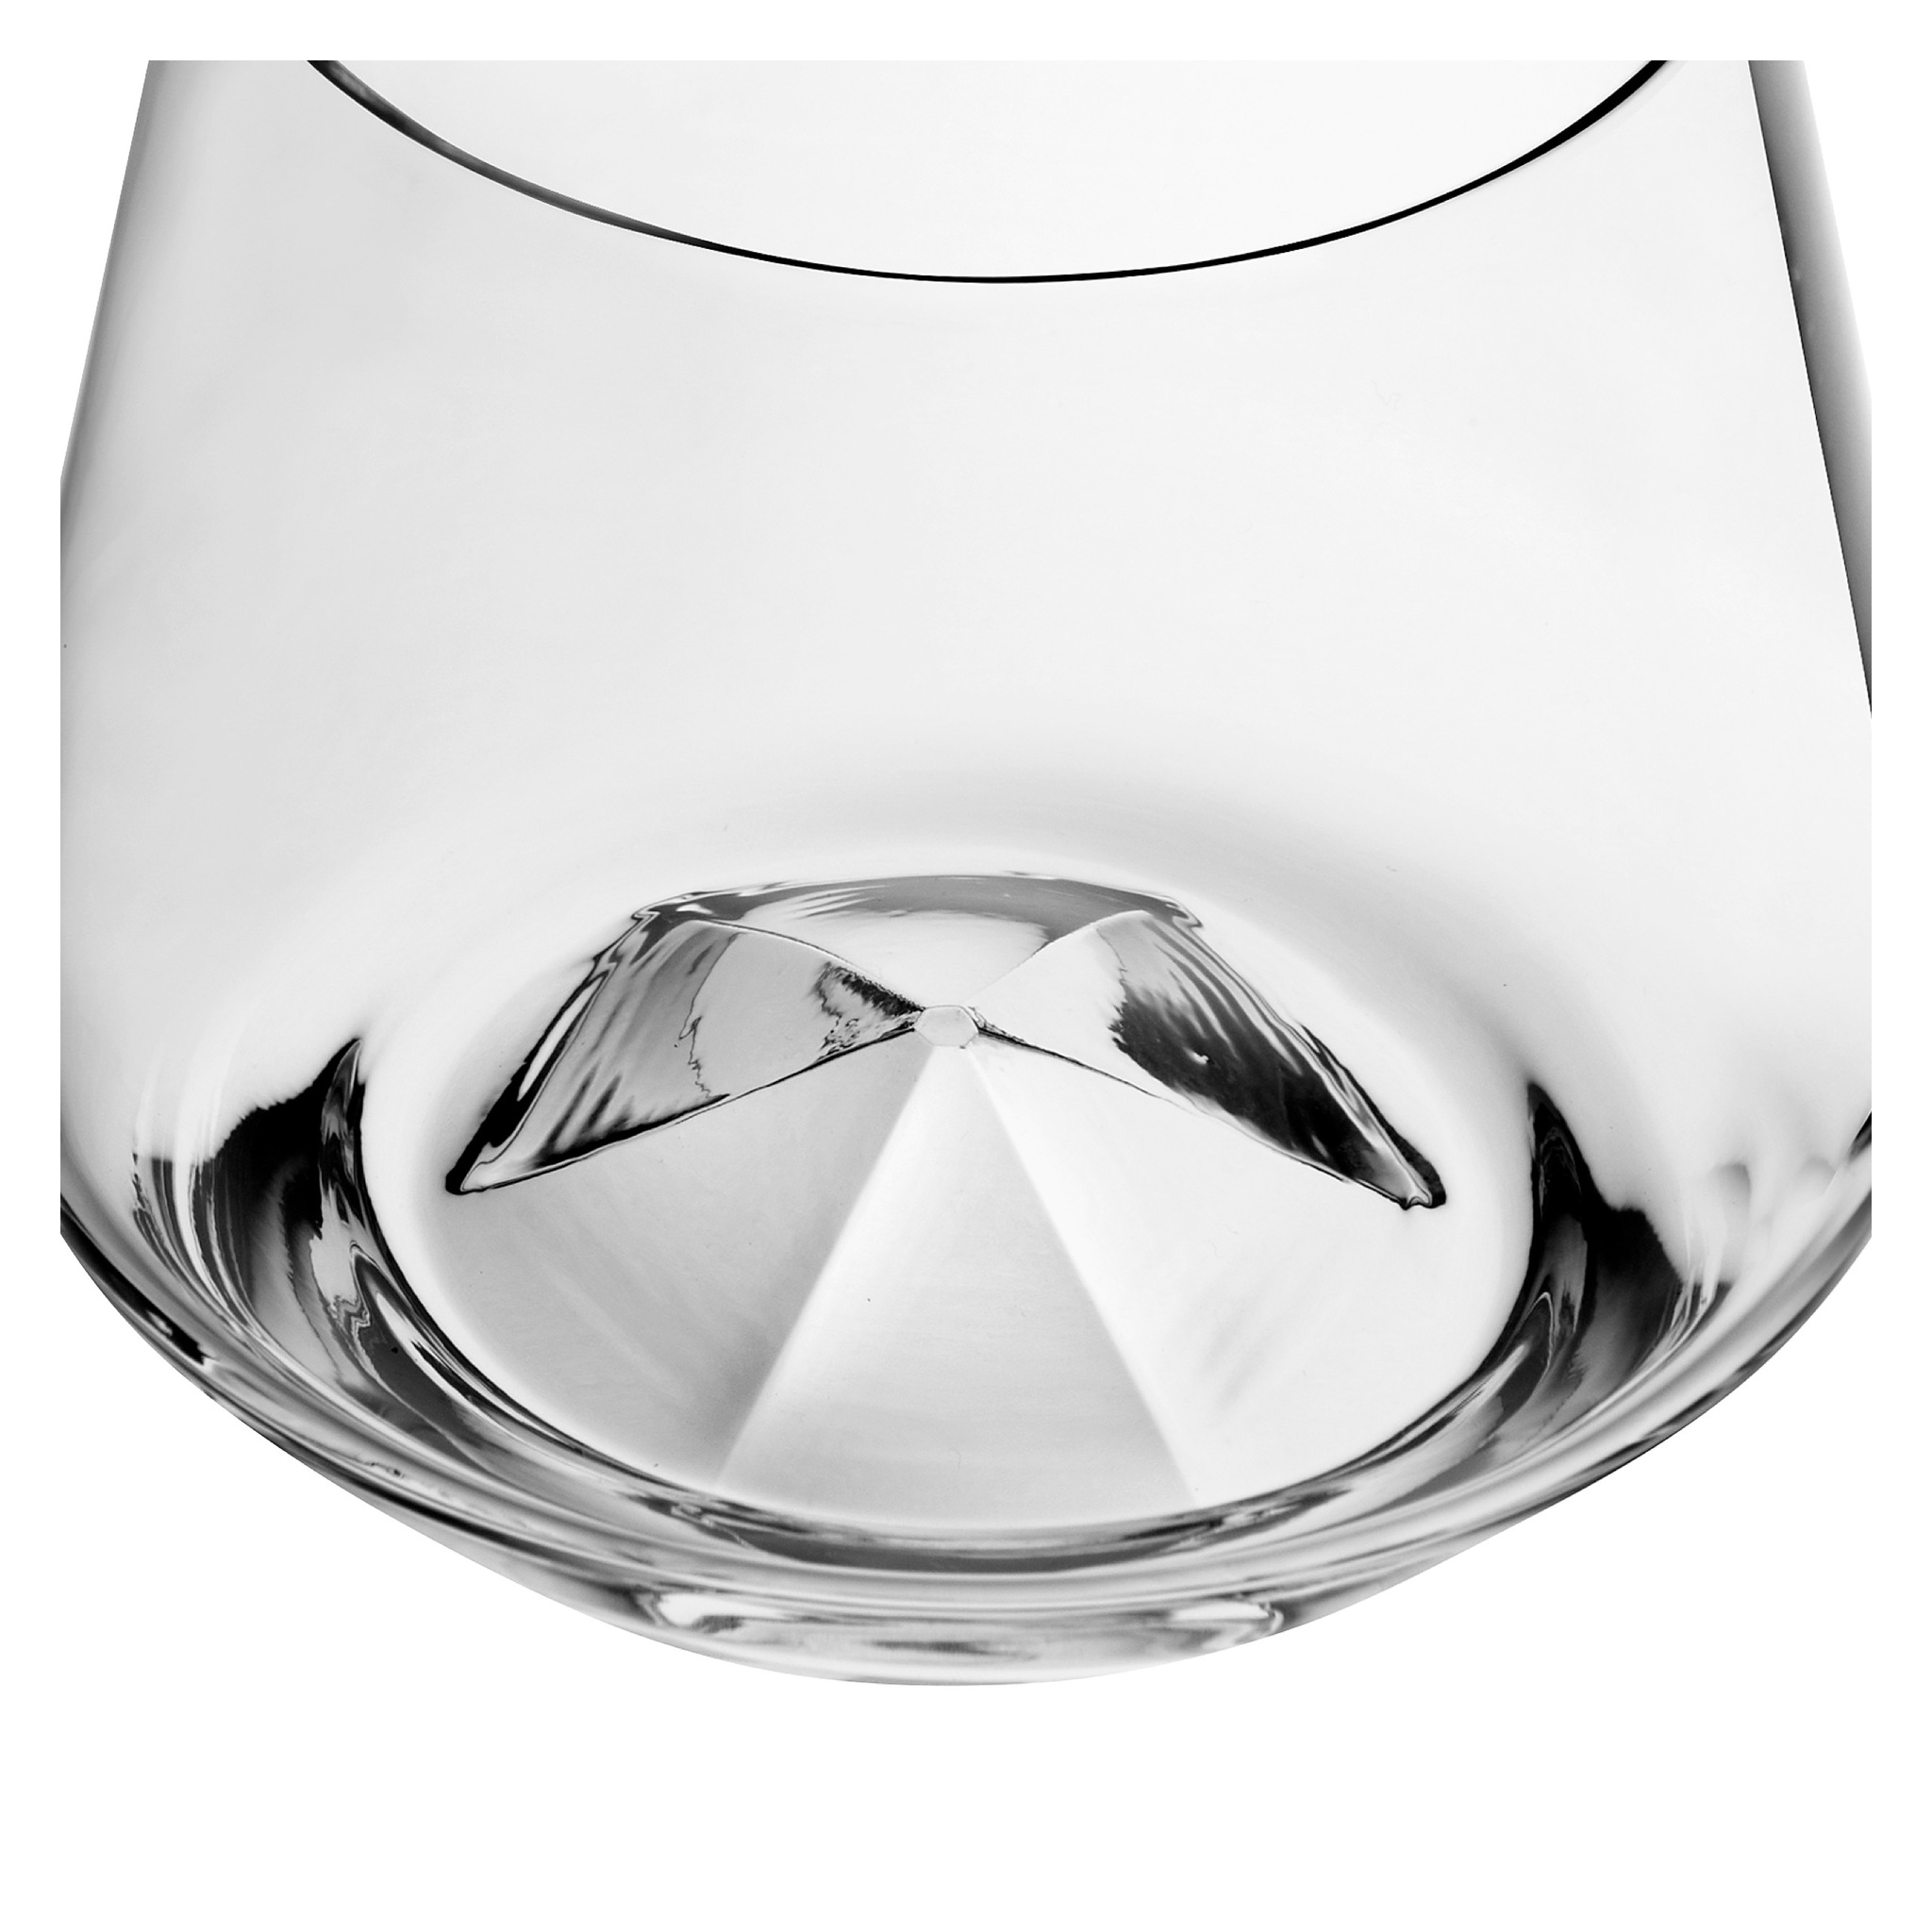 Deep Spirits Whiskyglas Diamond